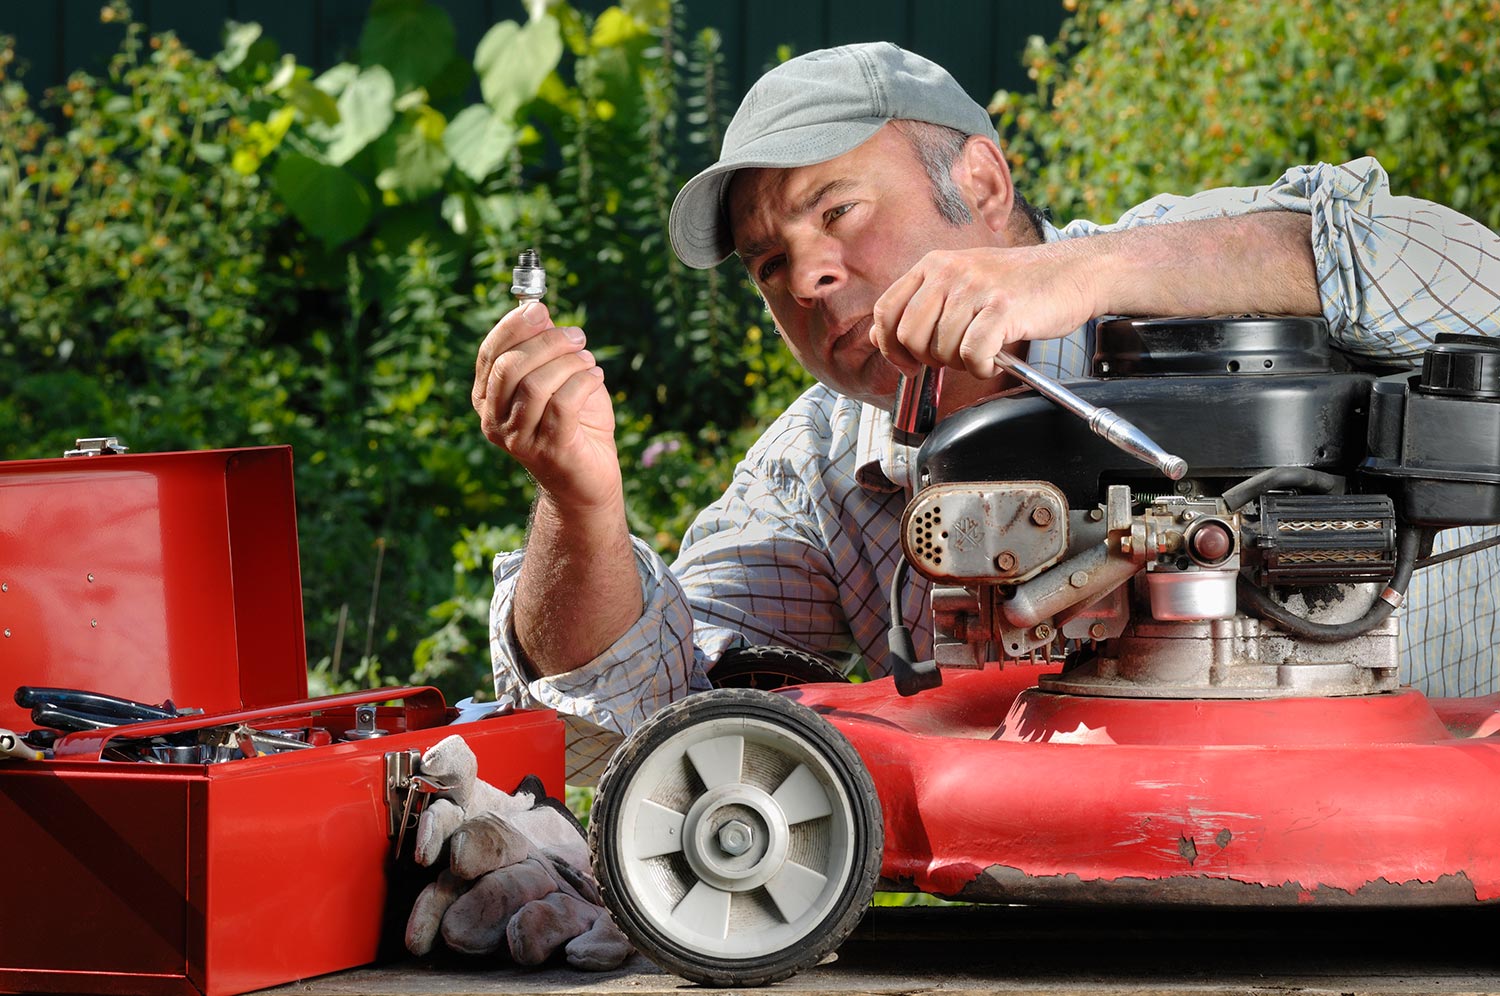 Man working on a lawnmower in the garden